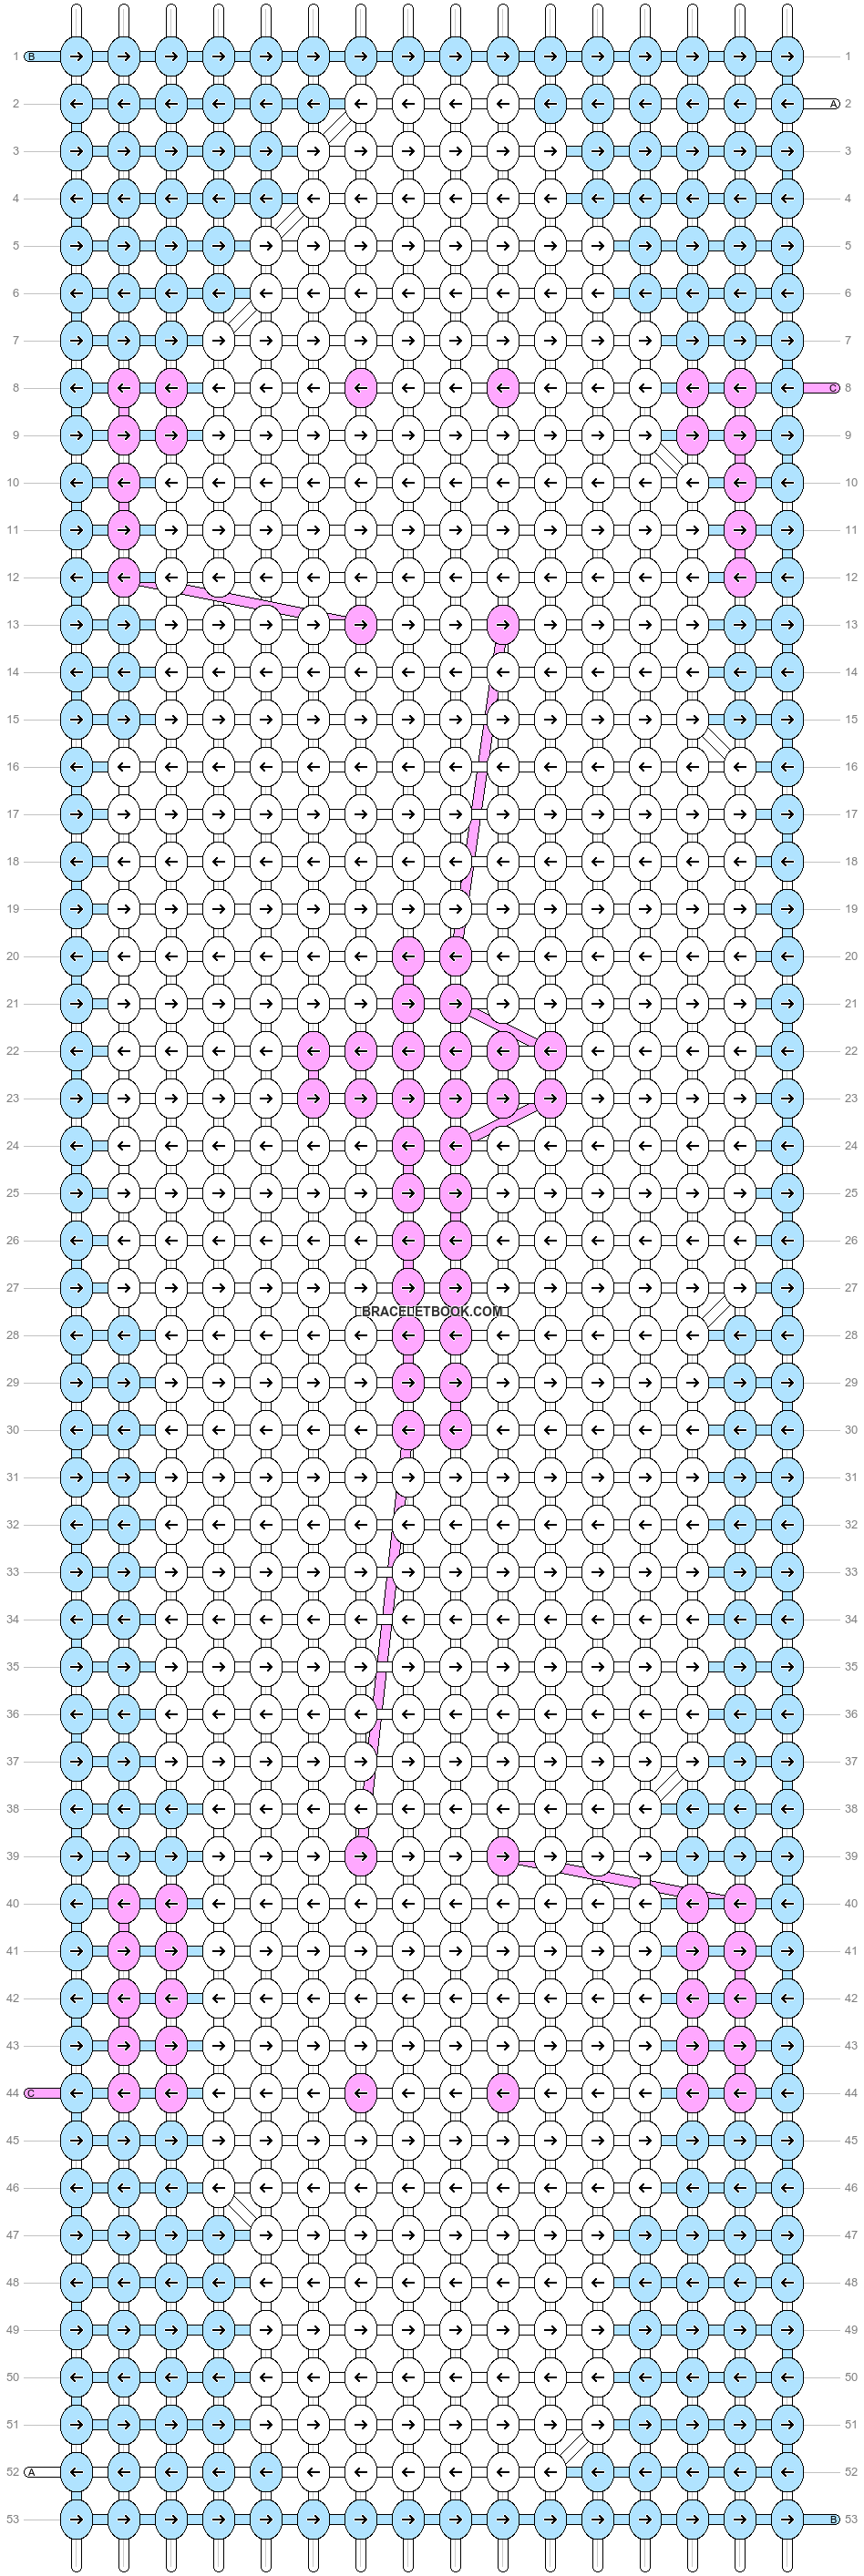 Alpha pattern #42572 variation #58303 pattern